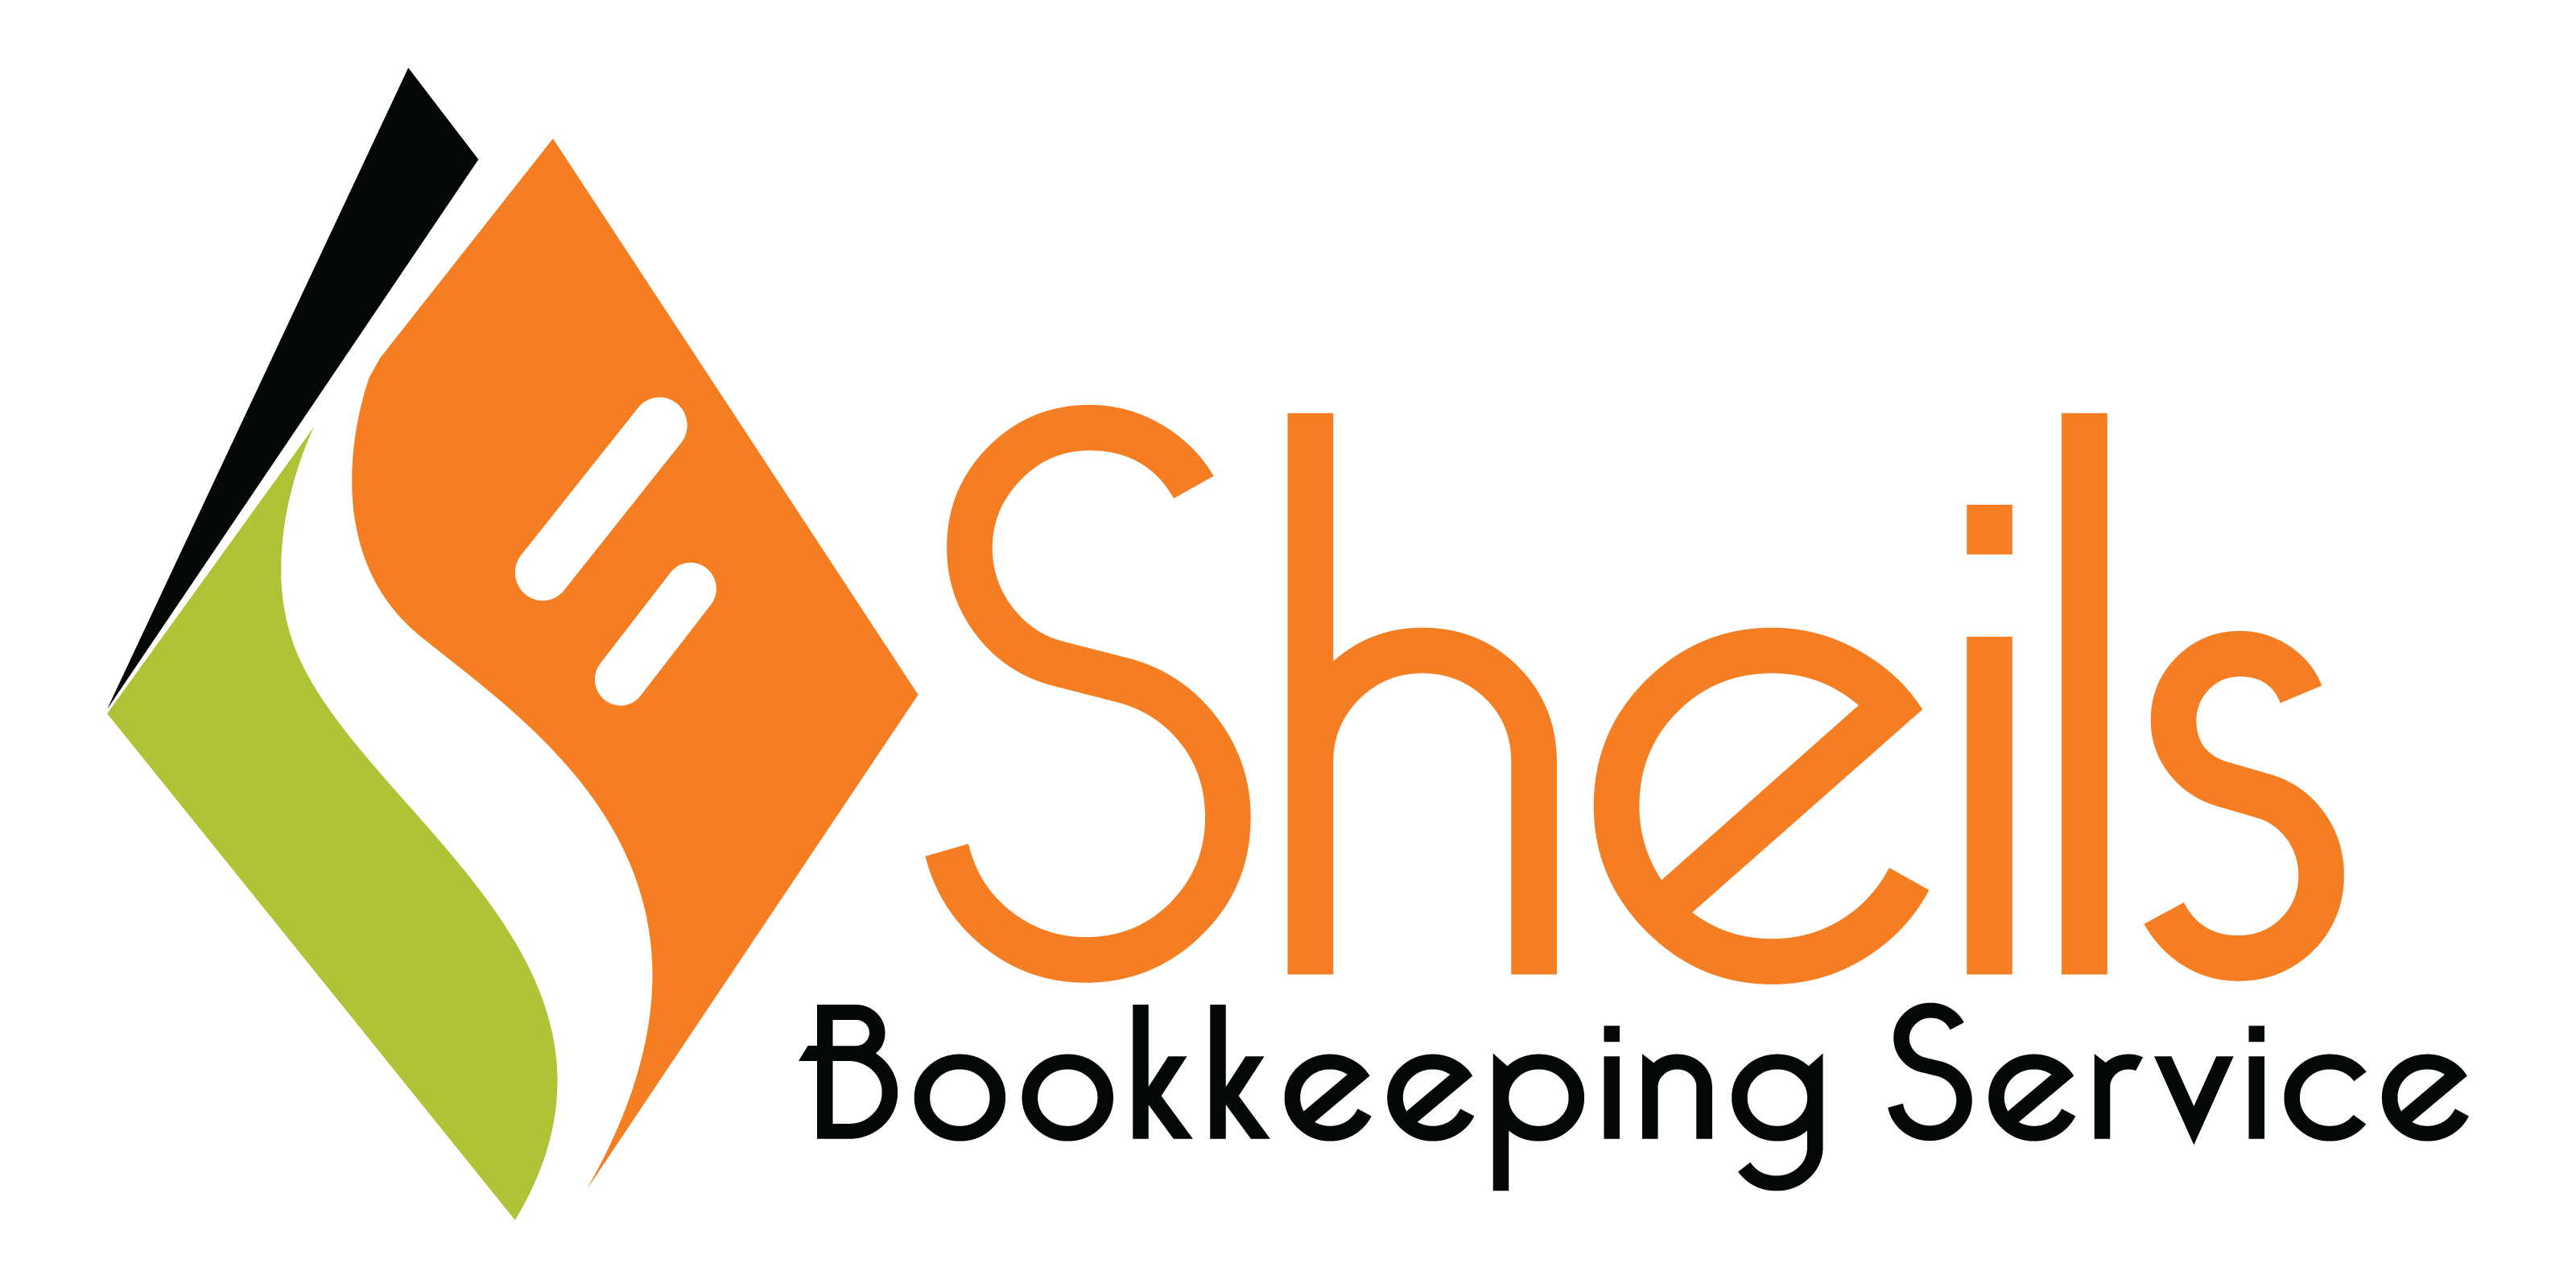 Sheils Bookkeeping